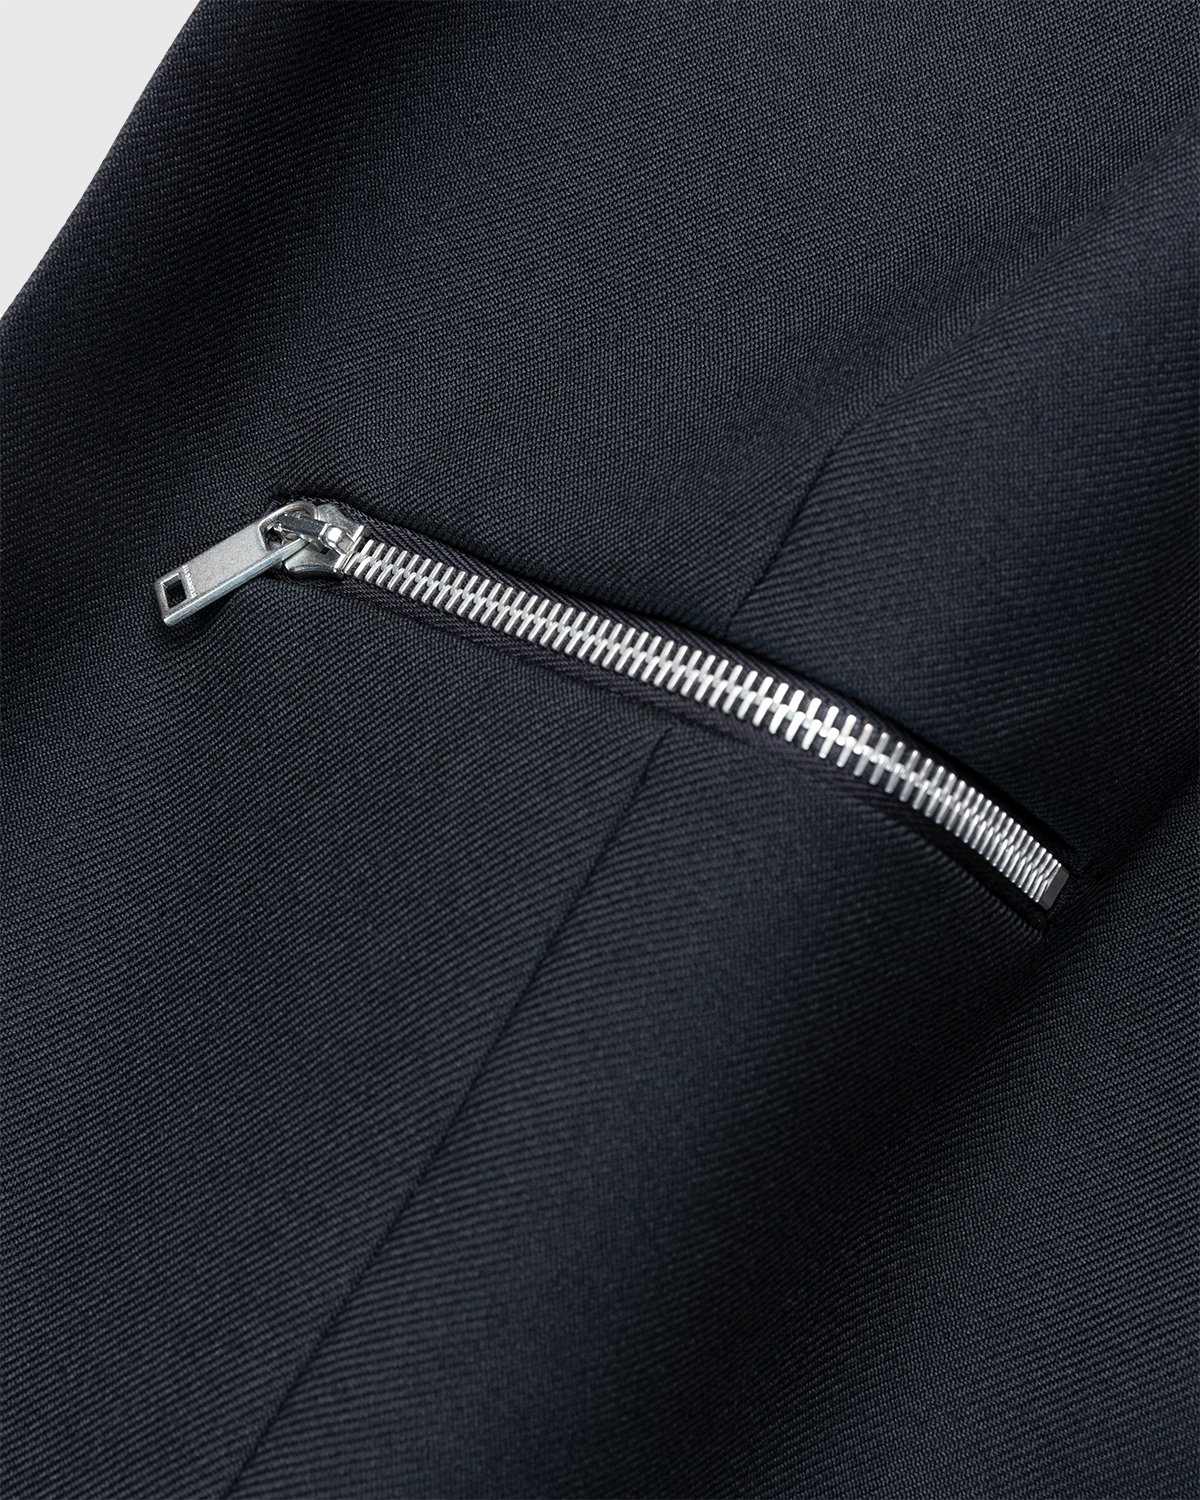 Jil Sander - Zip Pocket Trousers Black - Clothing - Black - Image 4